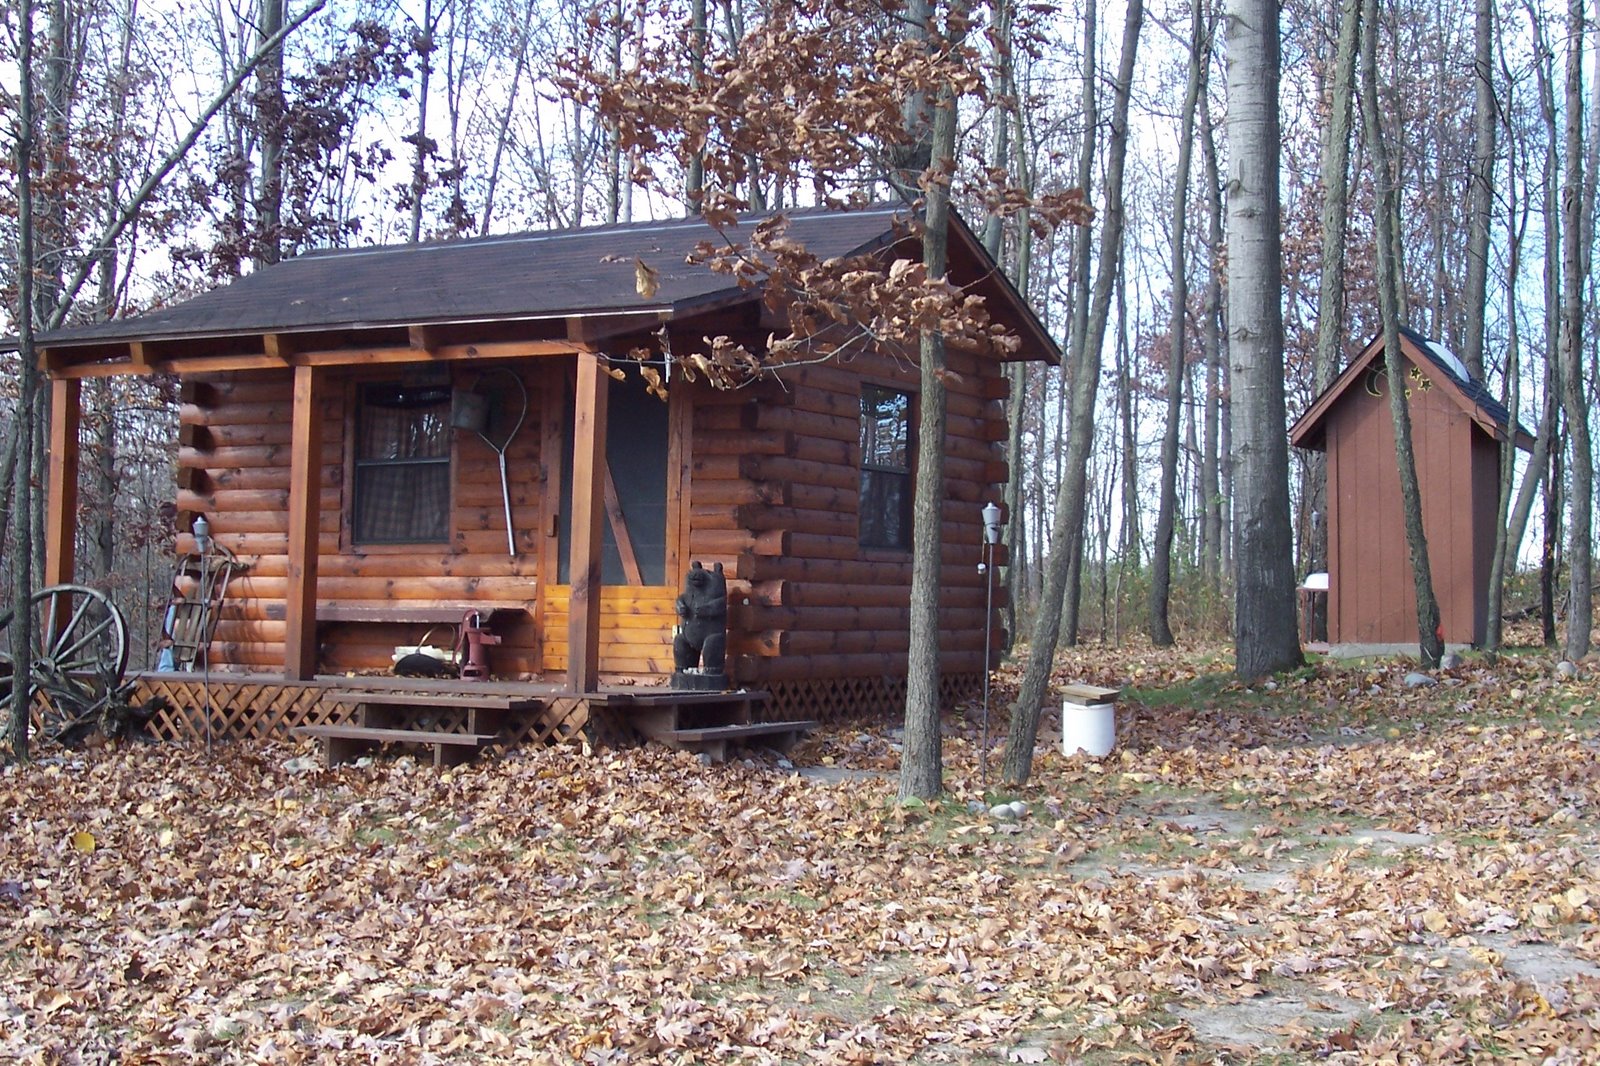 The Primitive Cabin